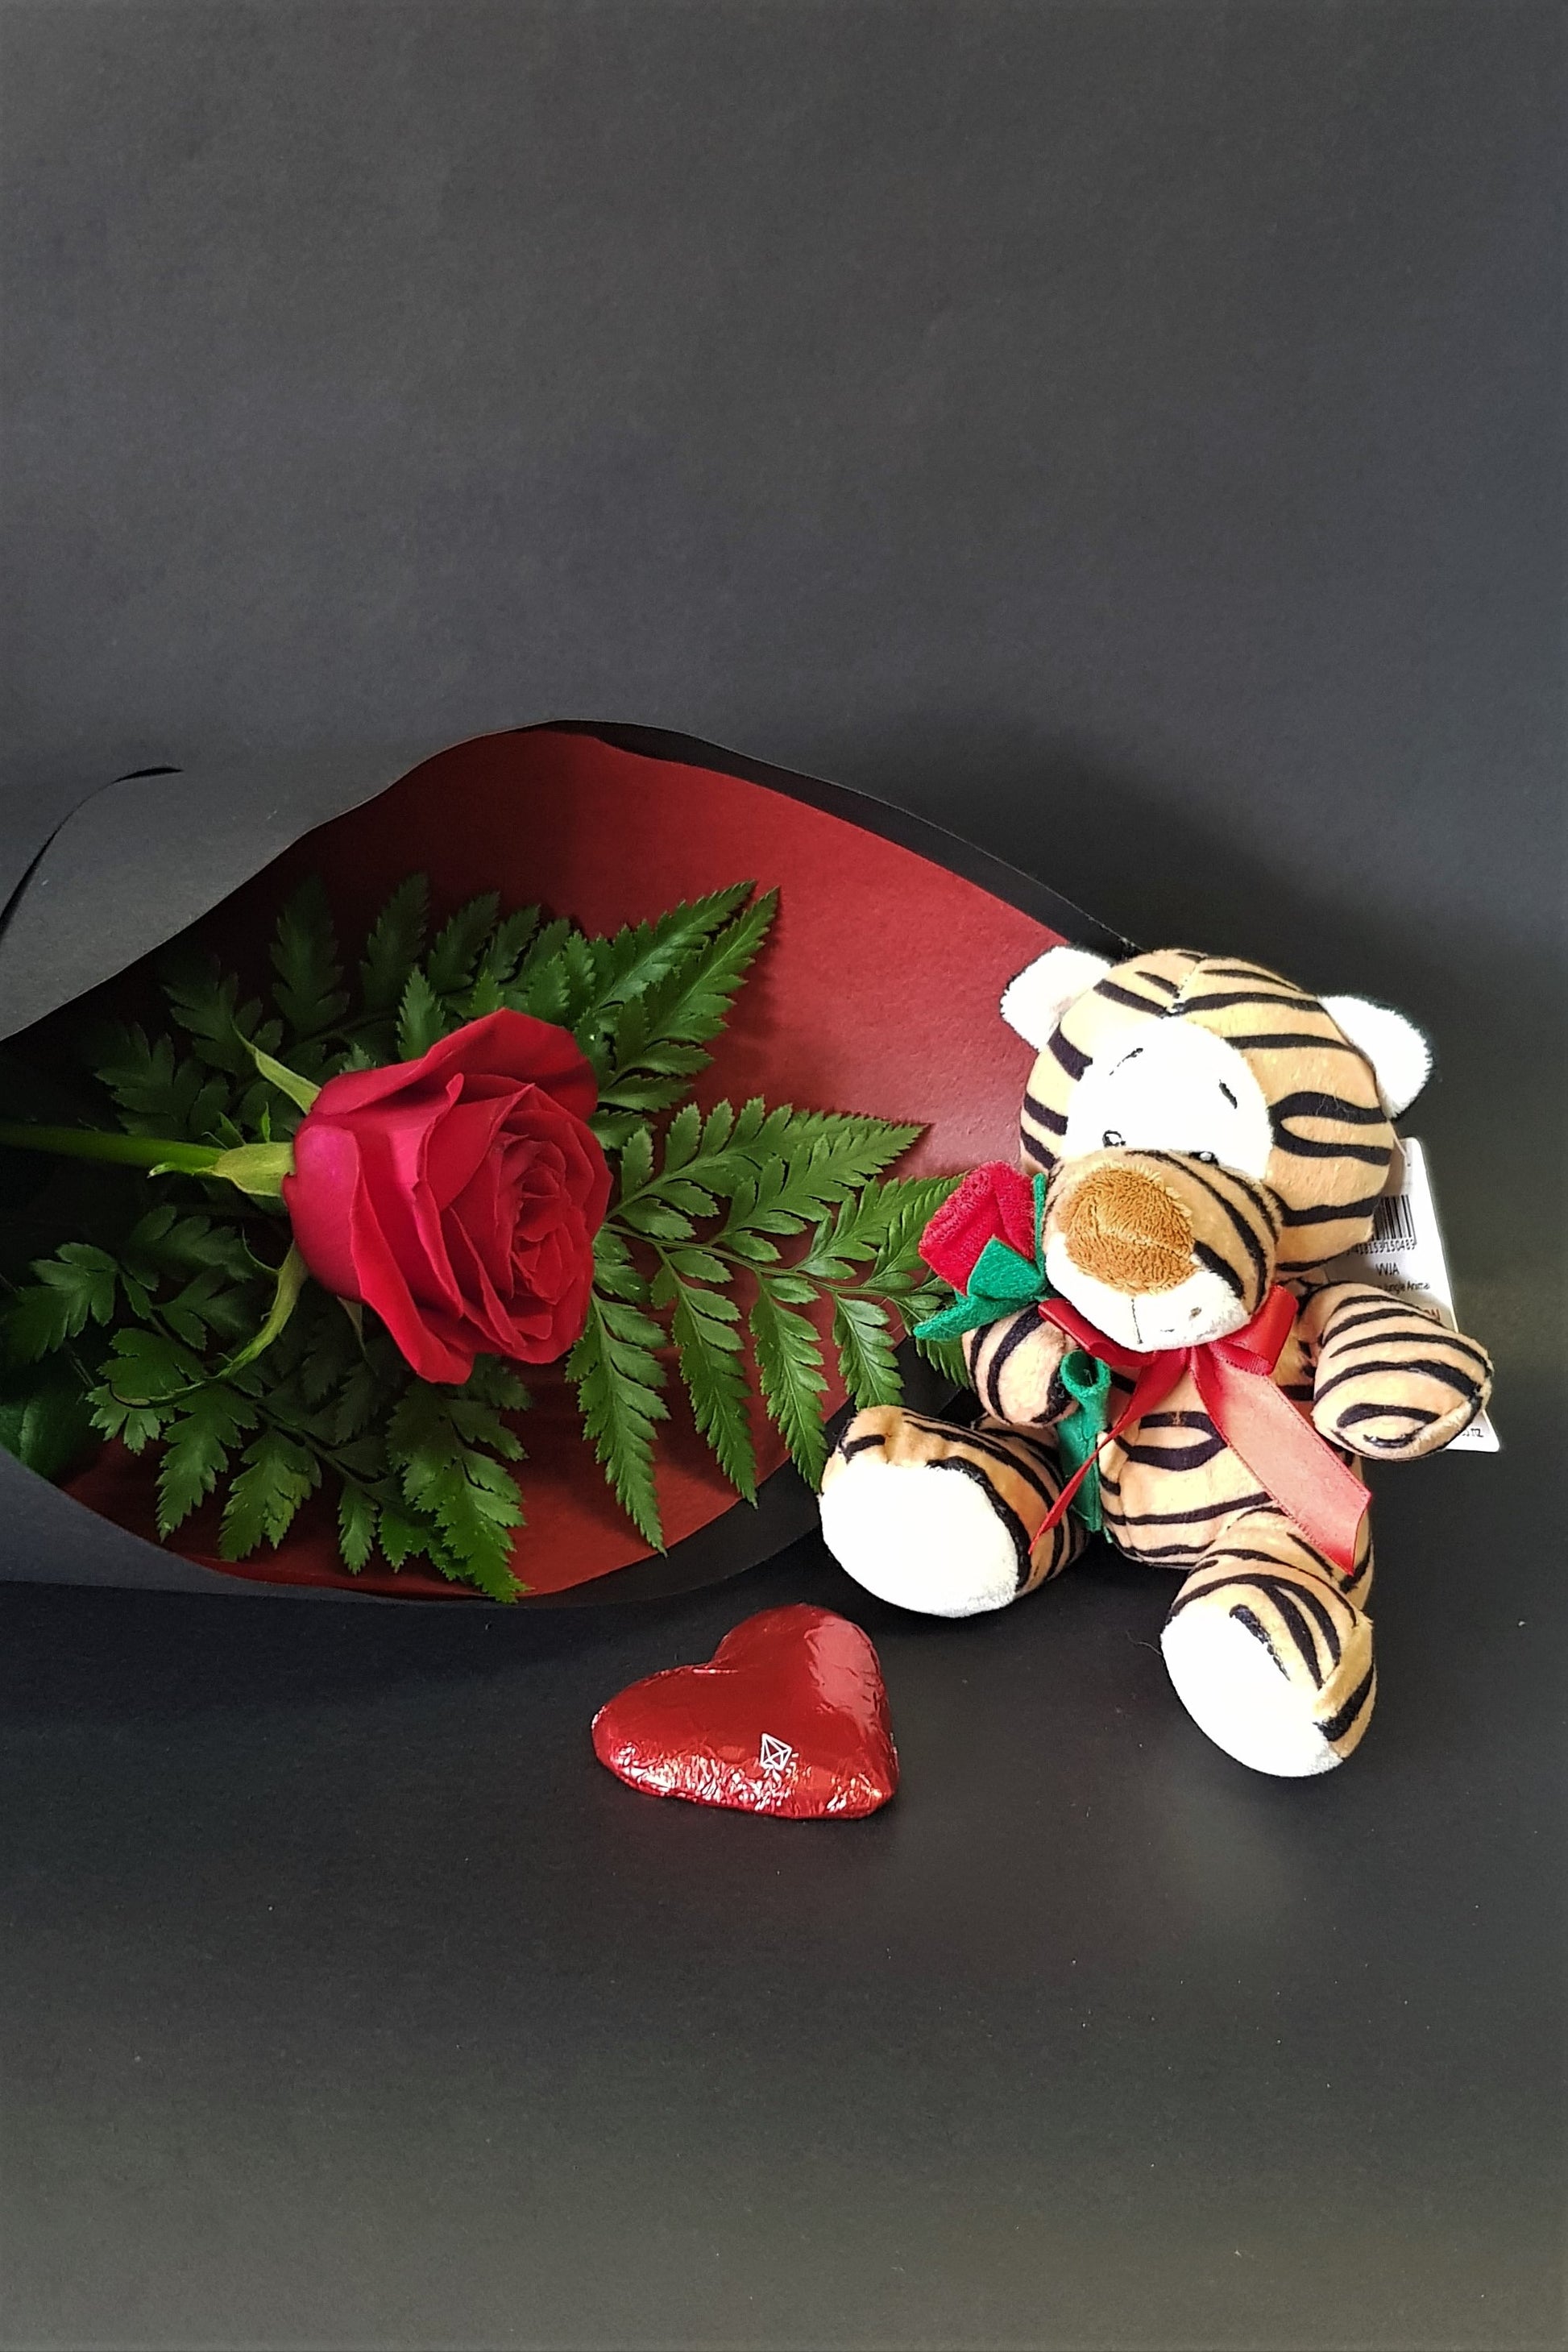 Single Rose Gift Pack - Rose, Teddy & Chocolate - Mangere Floral Studio